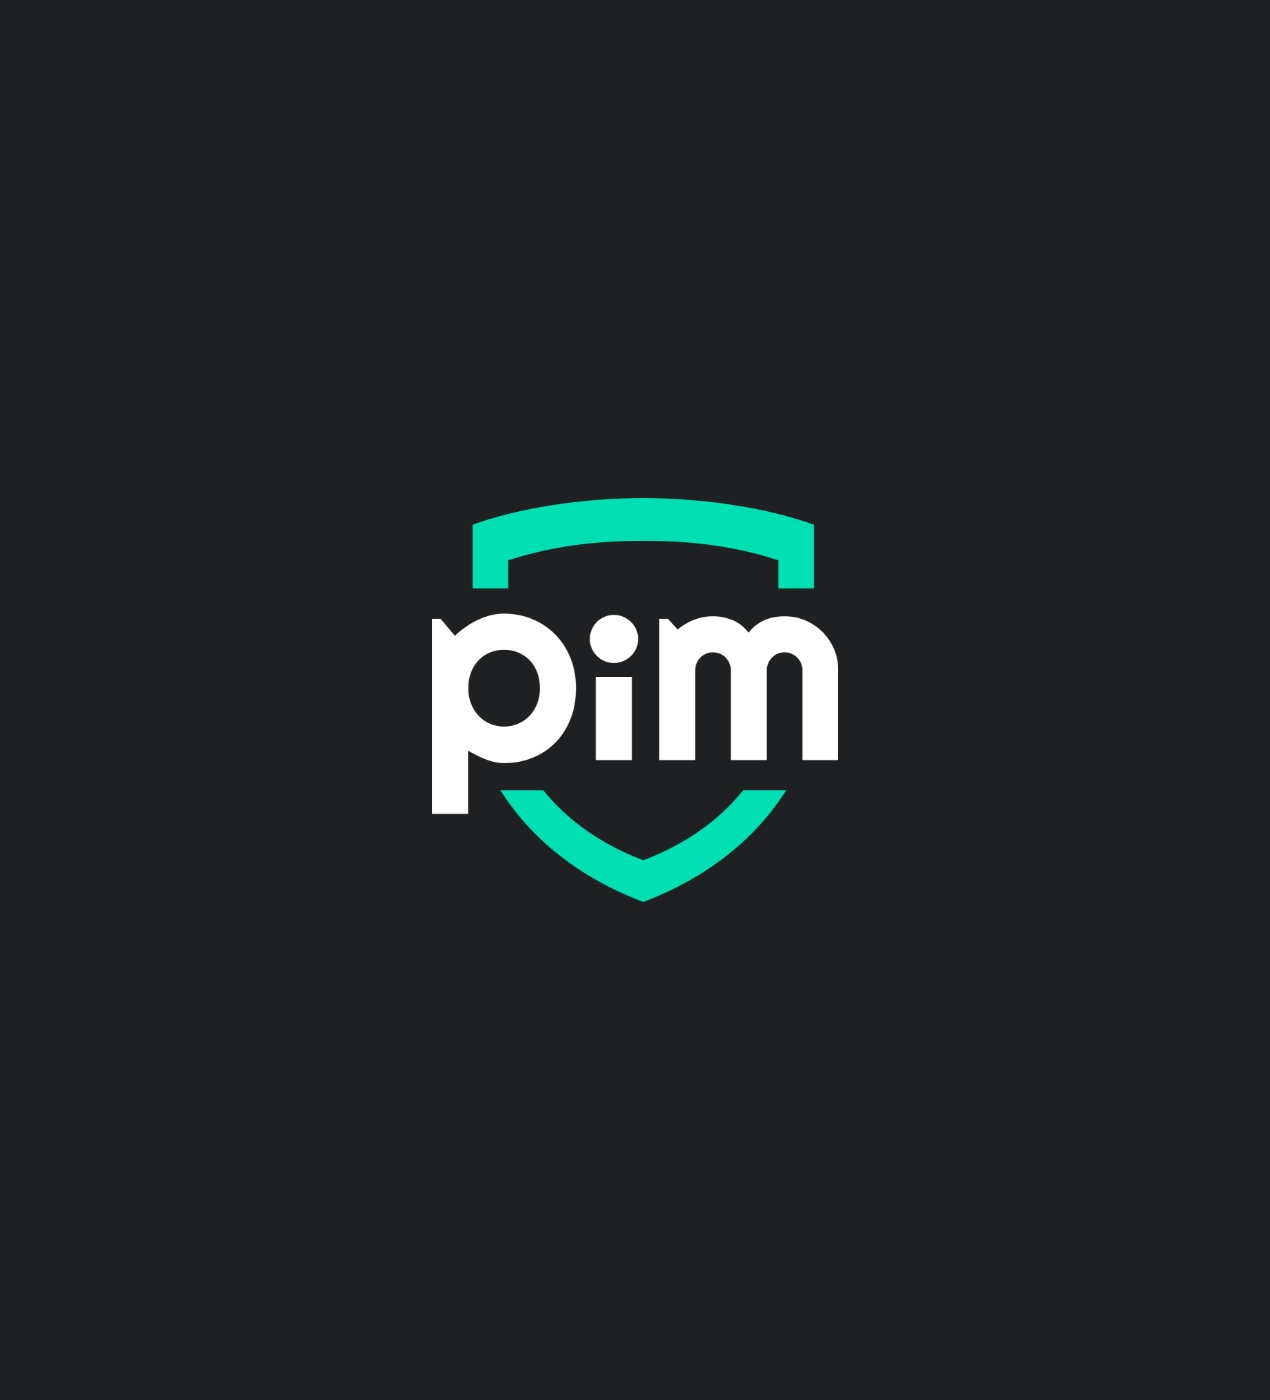 pim logo integratie zkr